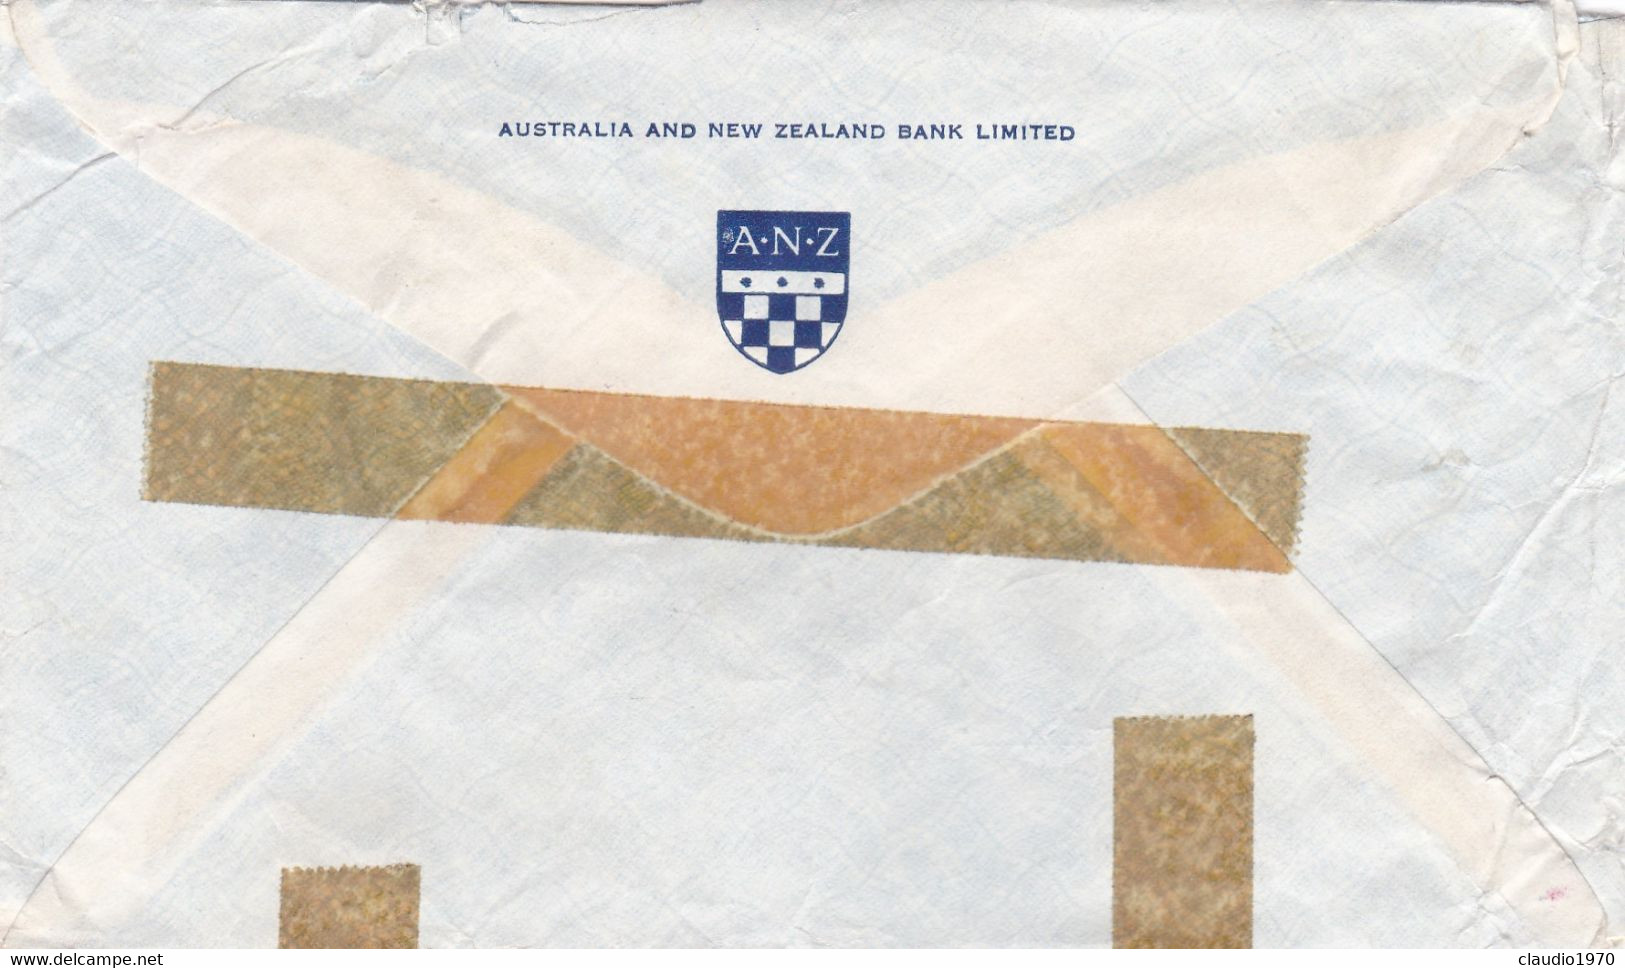 NEW ZEALAND - BUSTA VIAGGIATA BY AIR MAIL -  AUSTRALIA AND NEW ZEALAND BANK LIMITED - VIAGGIATA  PER MILANO - ITALY - Briefe U. Dokumente